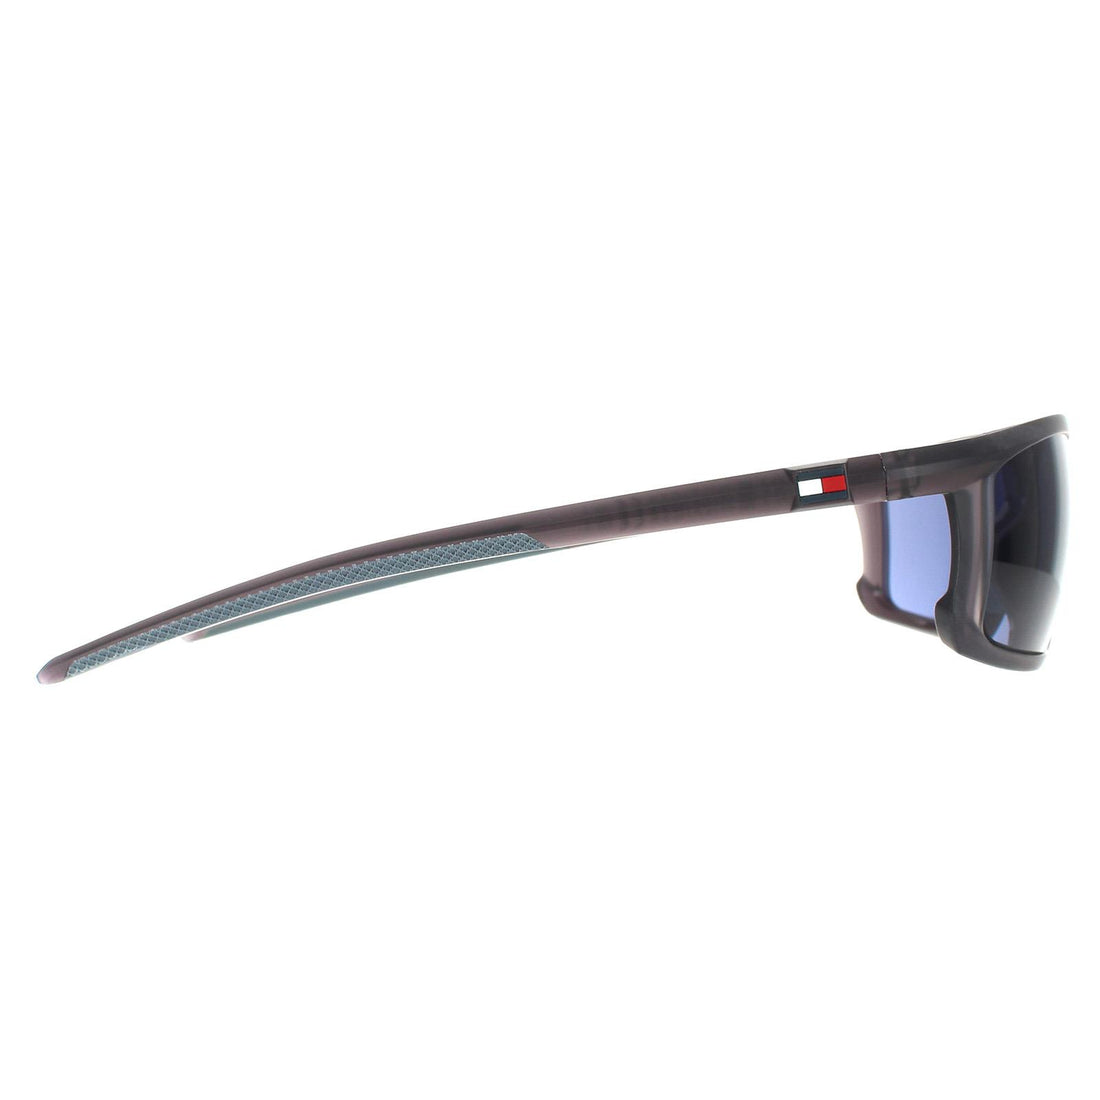 Tommy Hilfiger Sunglasses TH 1914/S FRE KU Matte Grey Blue